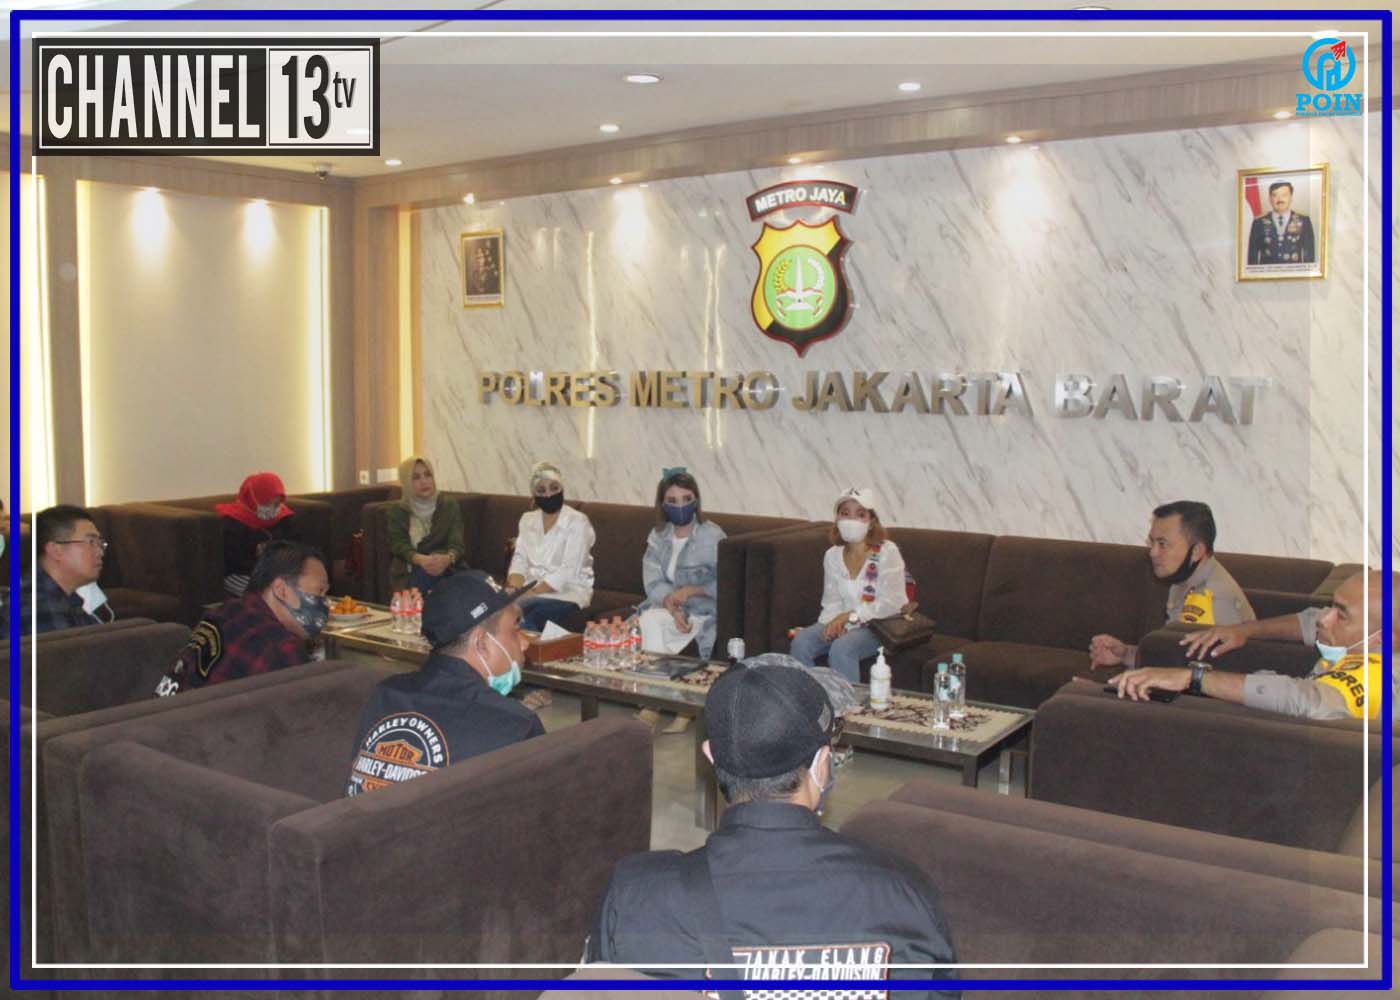 Empathy Building Polres Metro Jakarta Barat Dapat Apresiasi Kalangan Artis, Harley Owners & IPM